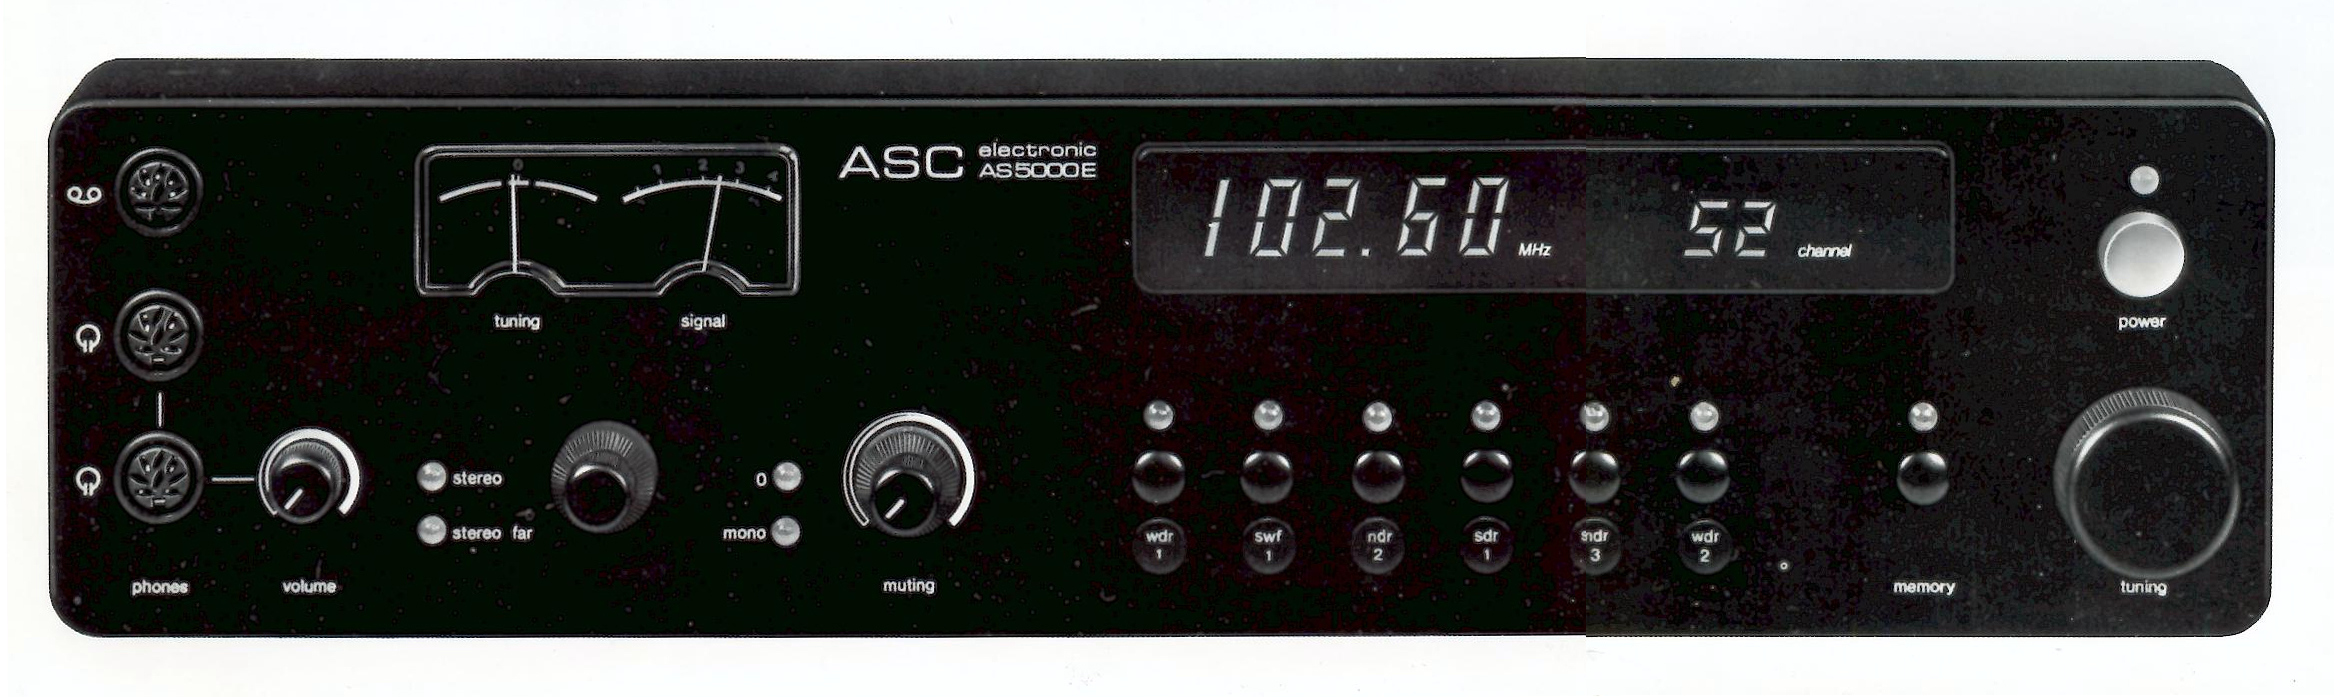 ASC AS-5000 E-Prospekt-1.jpg